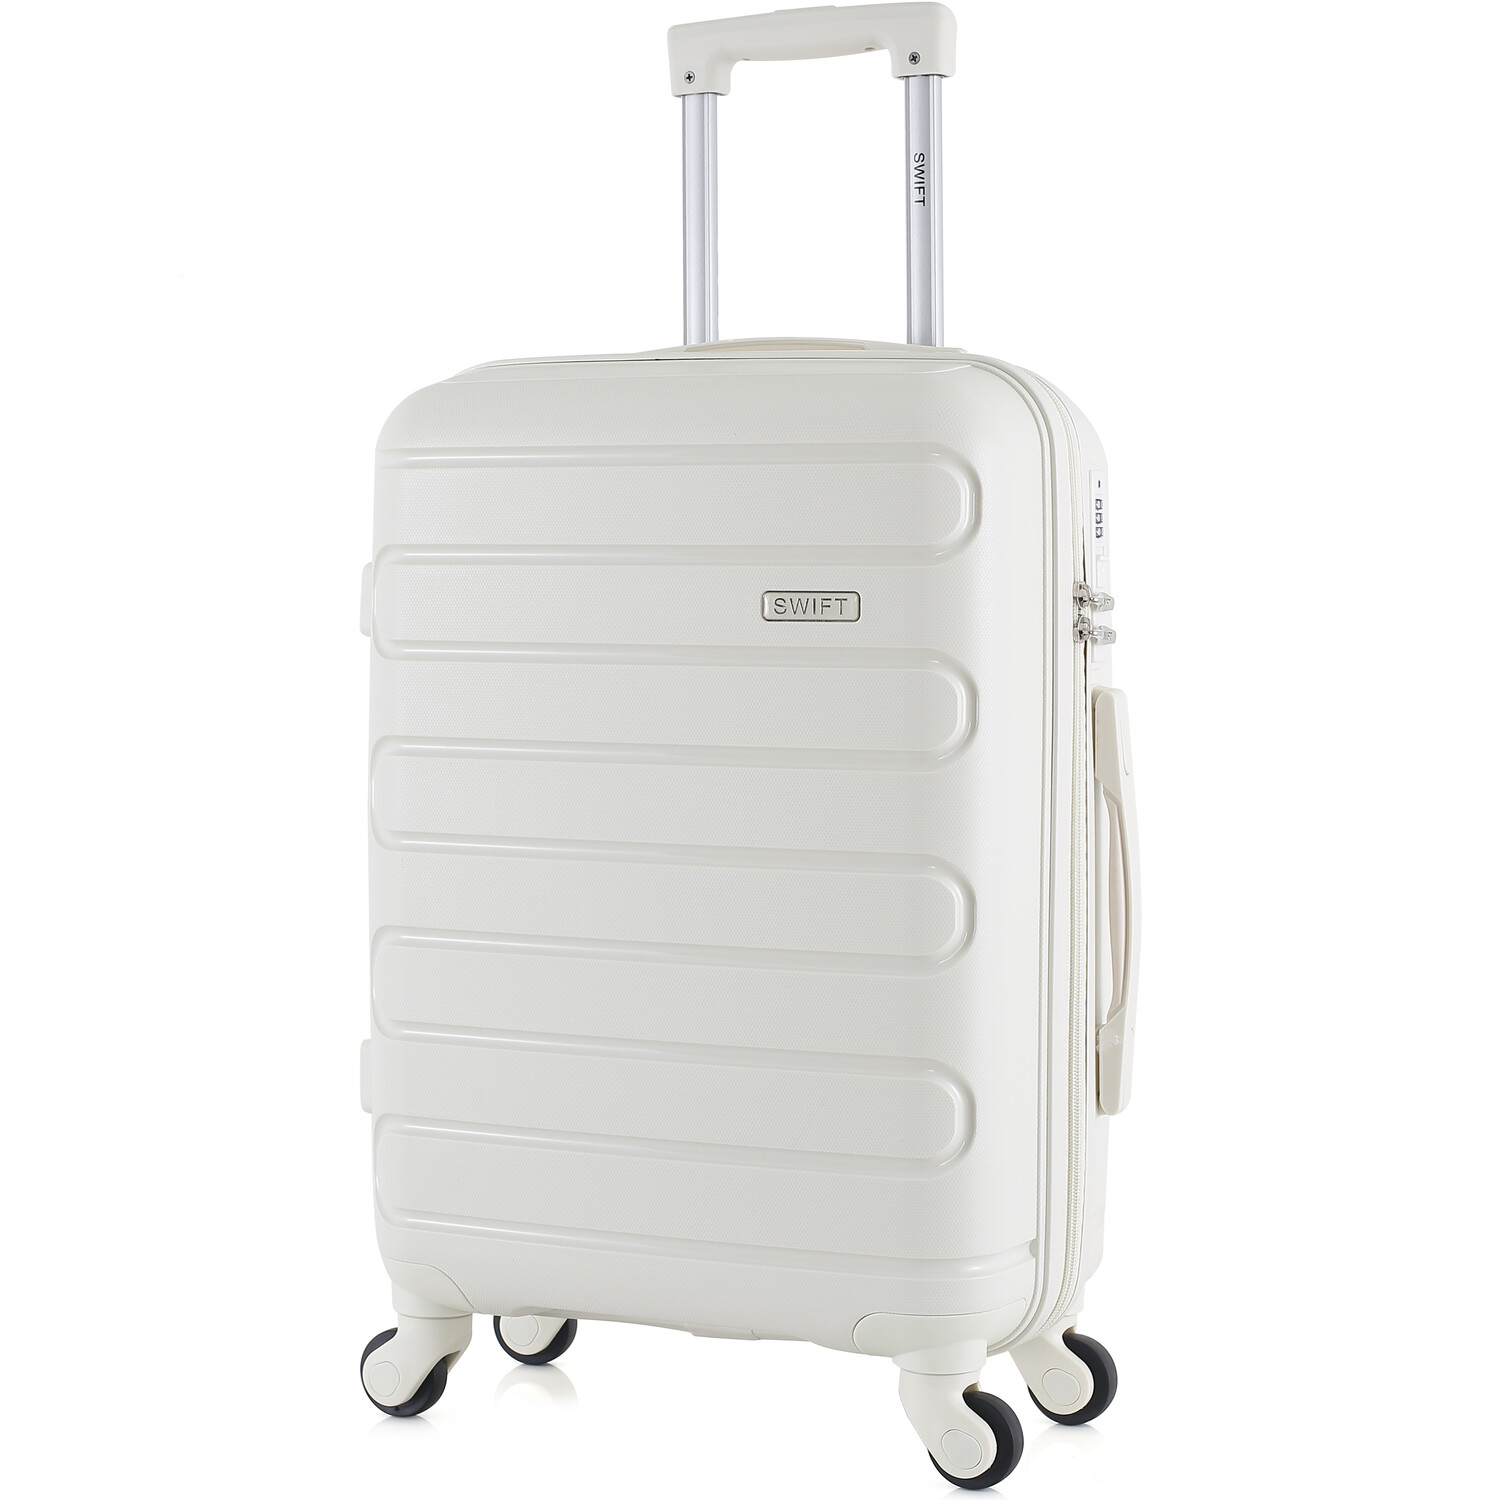 Swift Horizon Suitcase - Cotton White / Cabin Case Image 2